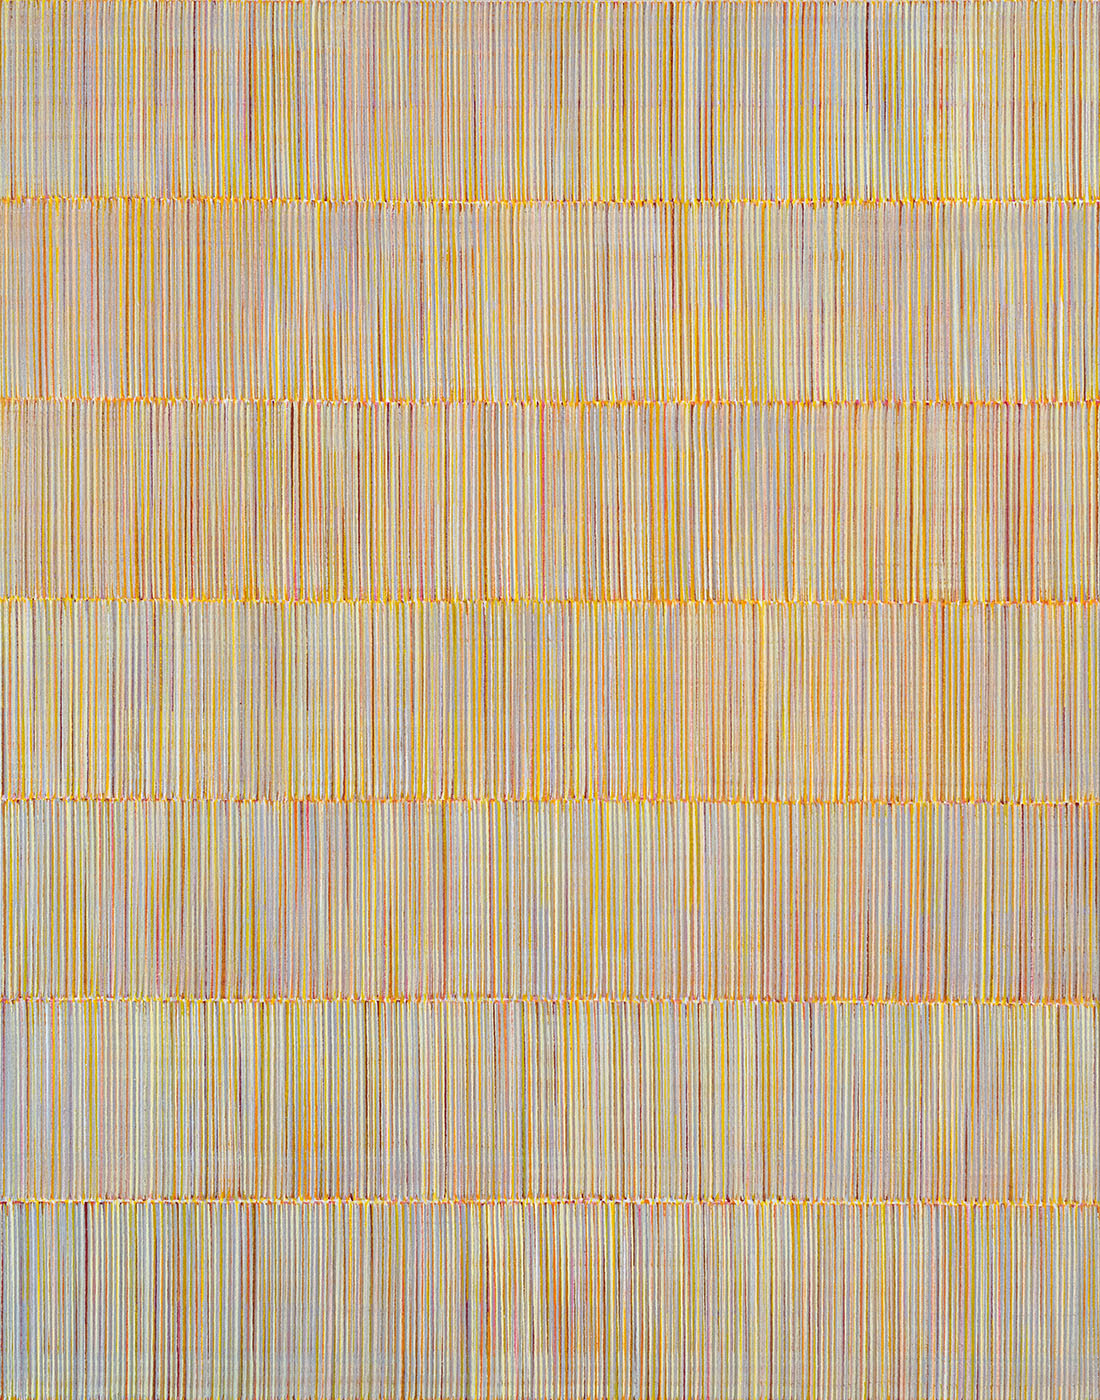 Nikola Dimitrov, KlangRaumGelb I, 2020, Pigmente, Bindemittel auf Leinwand, 140 x 110 cm